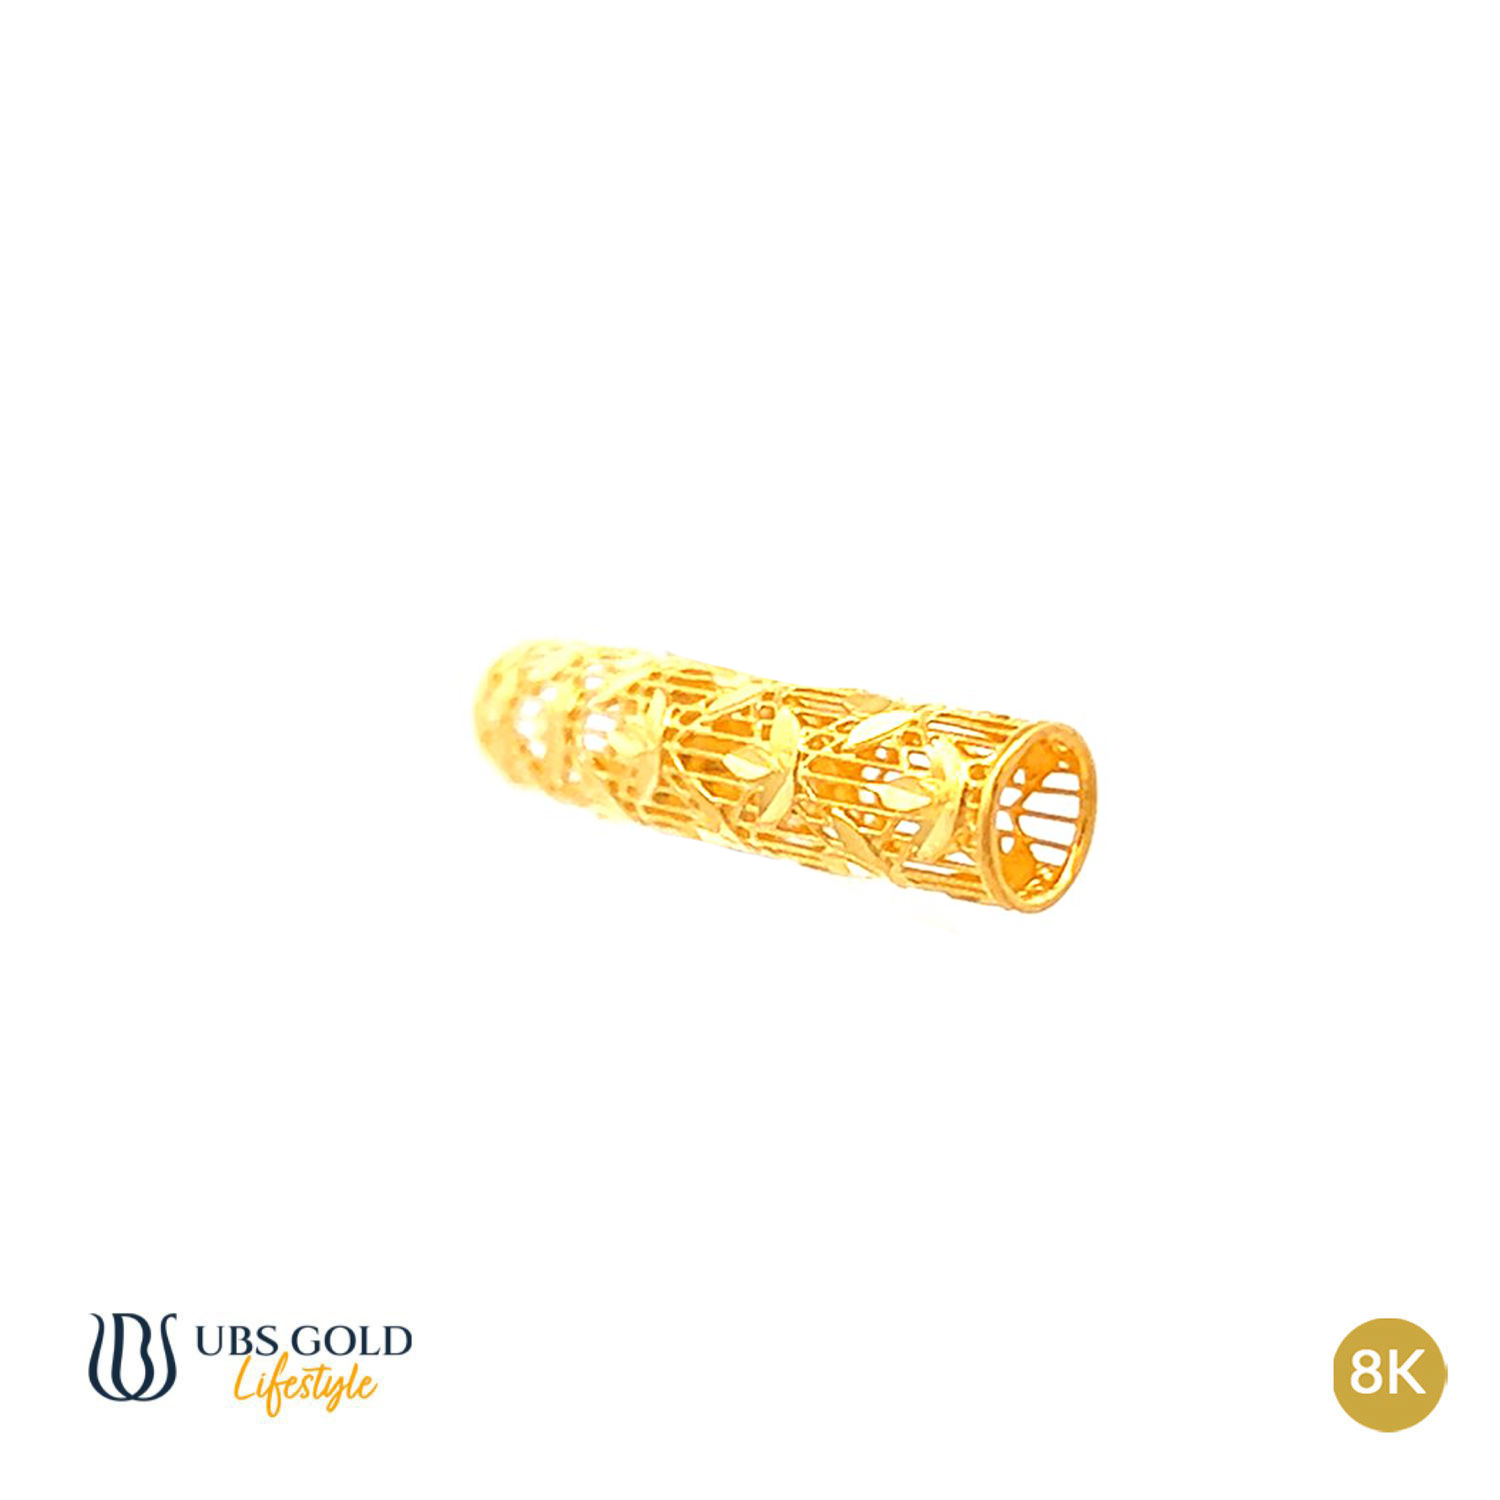 UBS Gold Liontin Emas Sakura - Cdm0085 - 8K